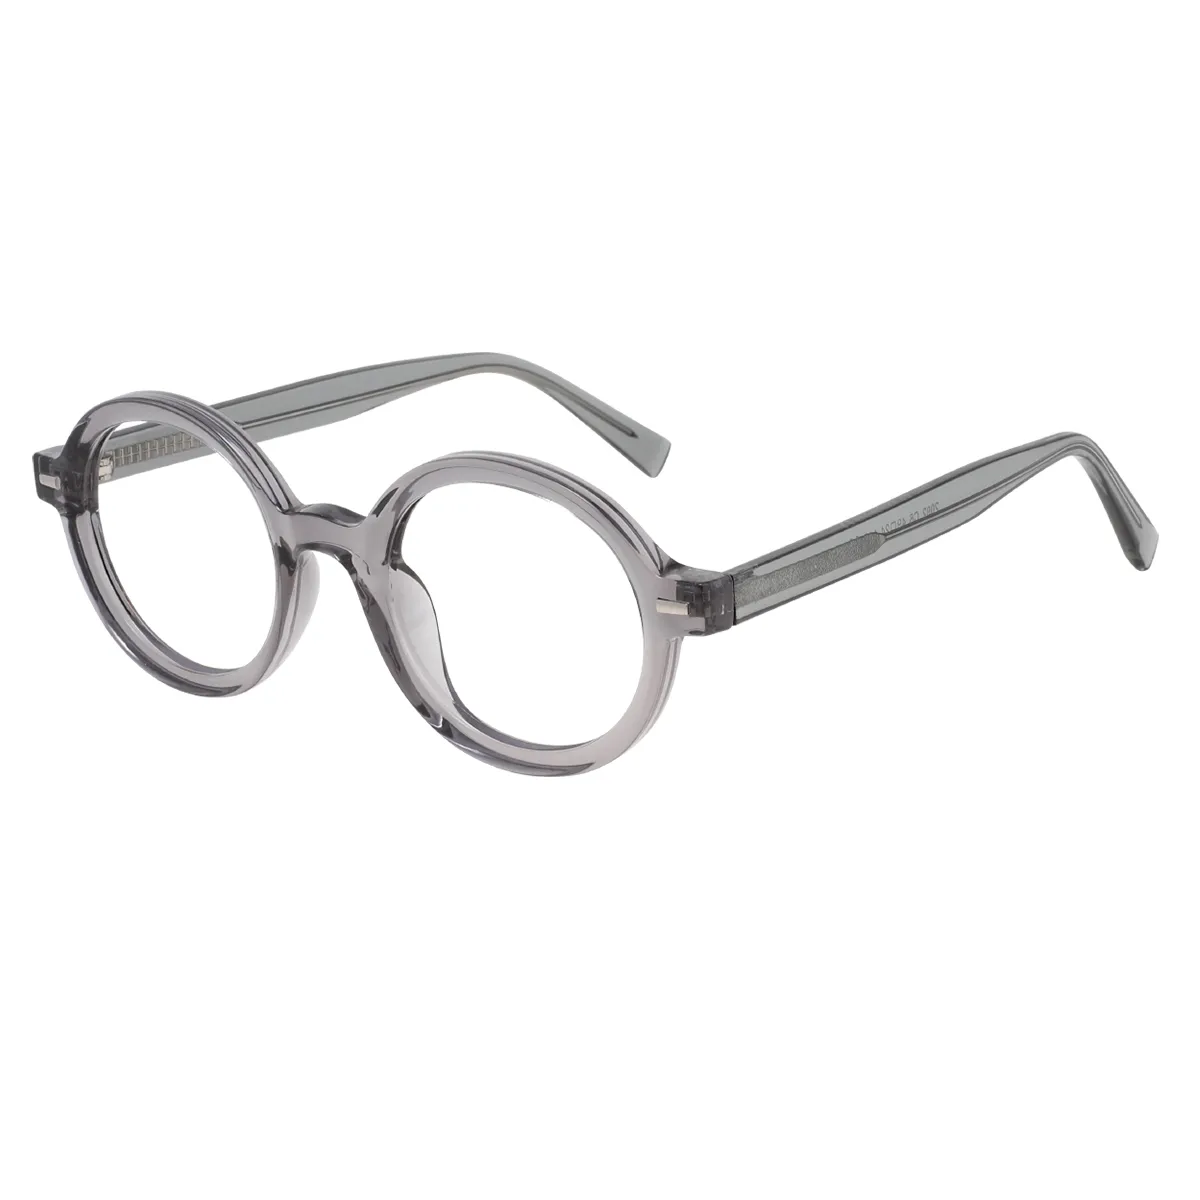 Pagan - Round Gray Glasses for Men & Women